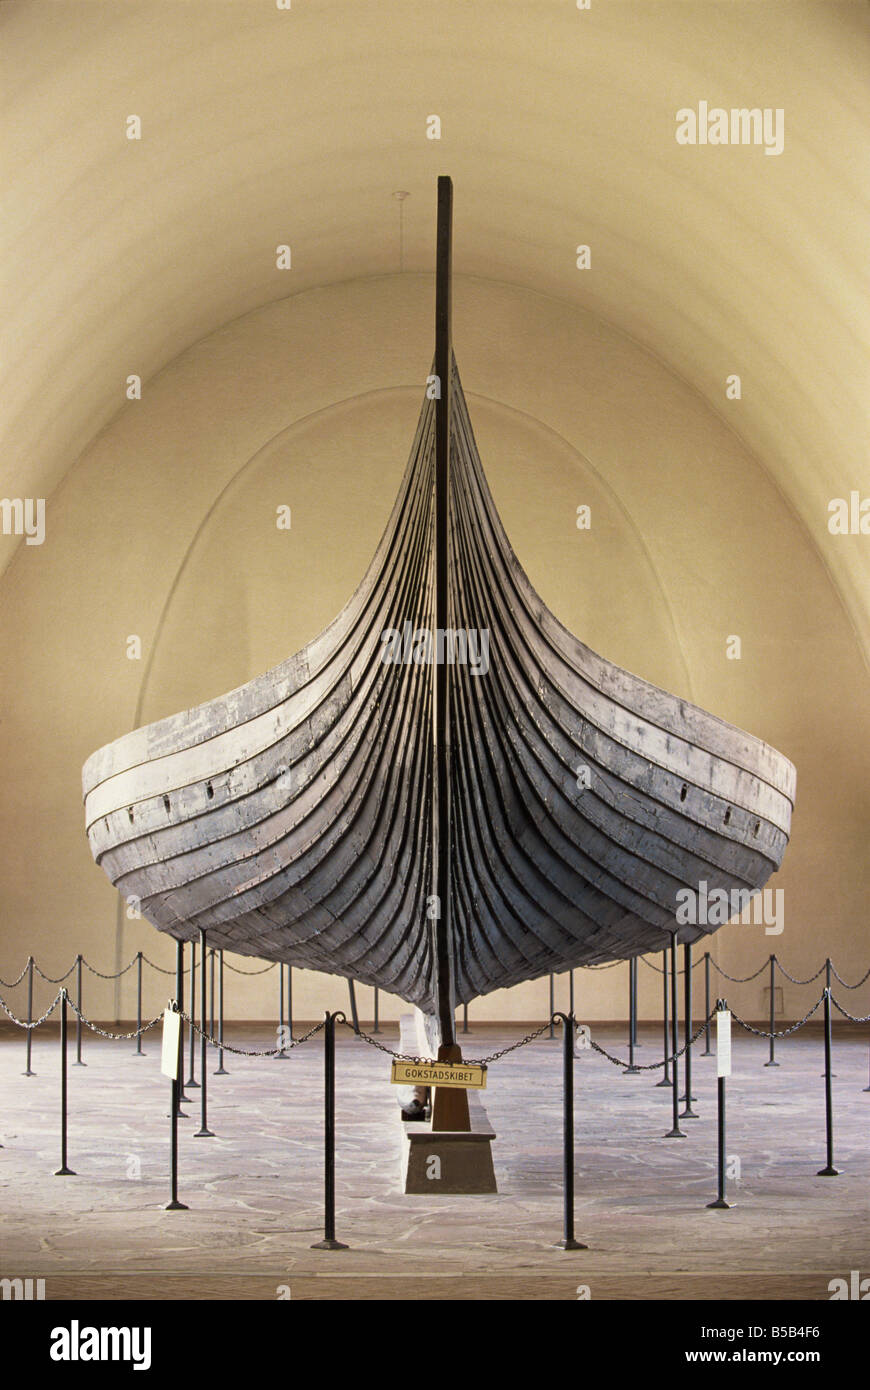 Navire de Gokstad, Viking Ship Museum, Bygdoy, Oslo, Norway, Scandinavia, Europe Banque D'Images